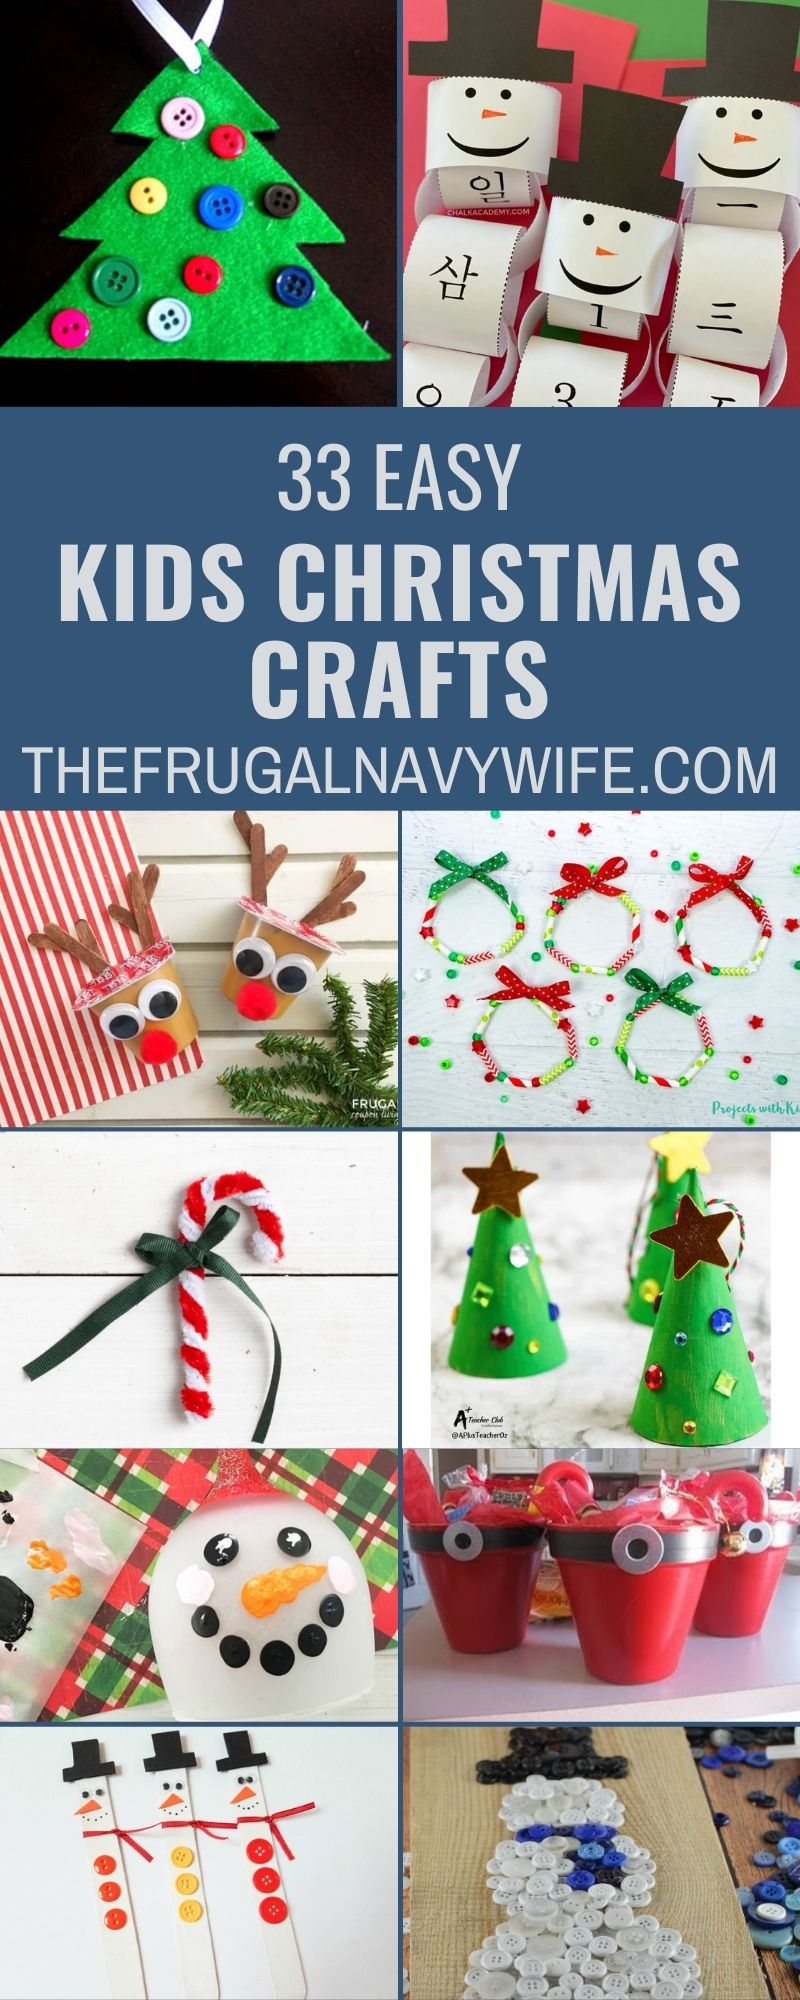 https://www.thefrugalnavywife.com/wp-content/uploads/2018/10/33-Easy-Kids-Christmas-Crafts.jpg